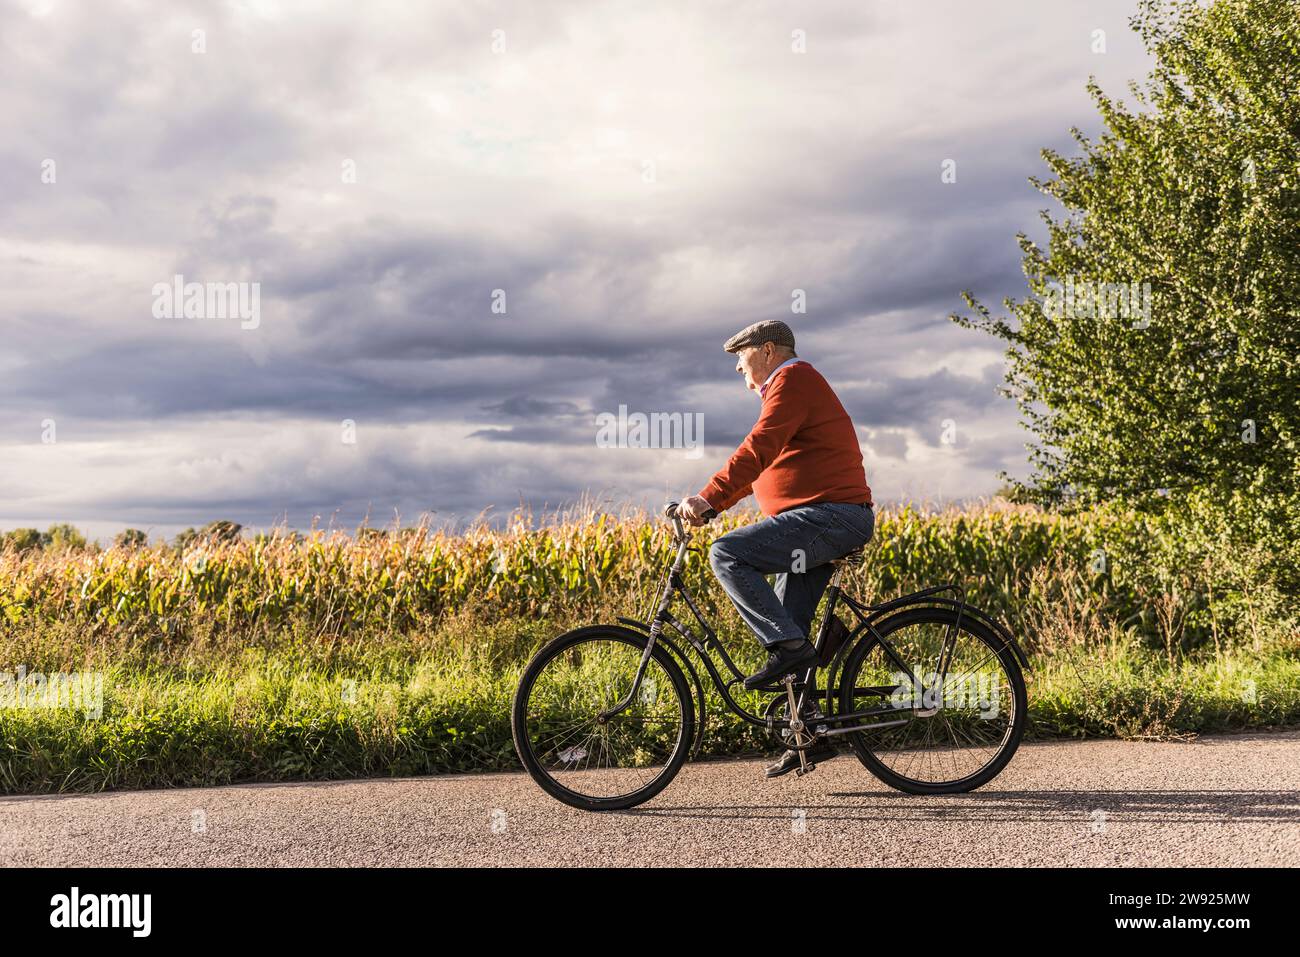 Senior man cycling on road near plants Stock Photo